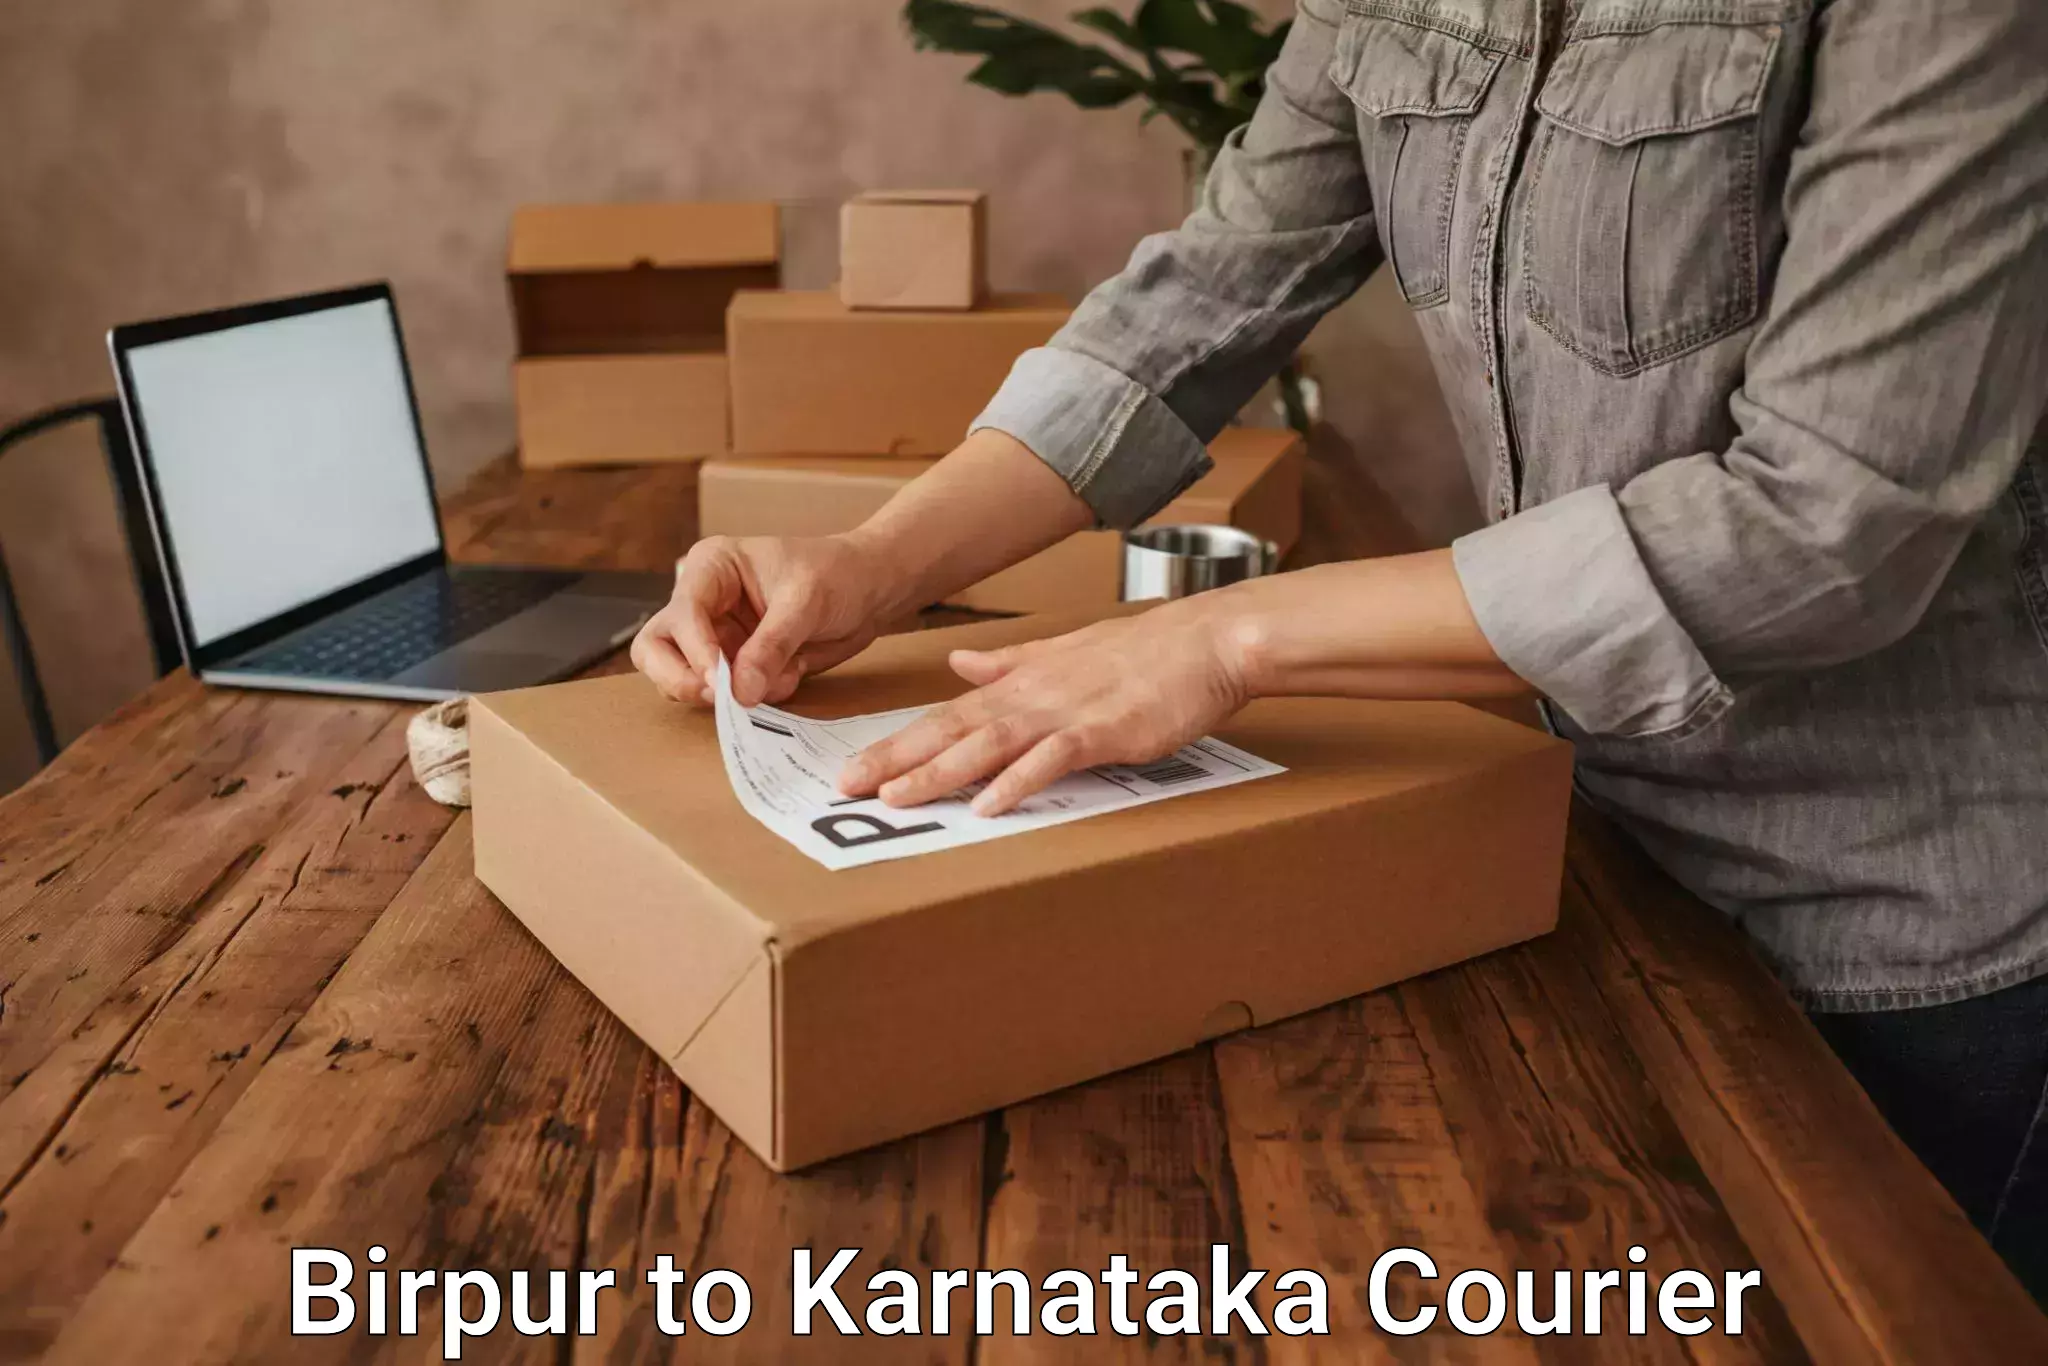 Furniture relocation experts Birpur to Karnataka